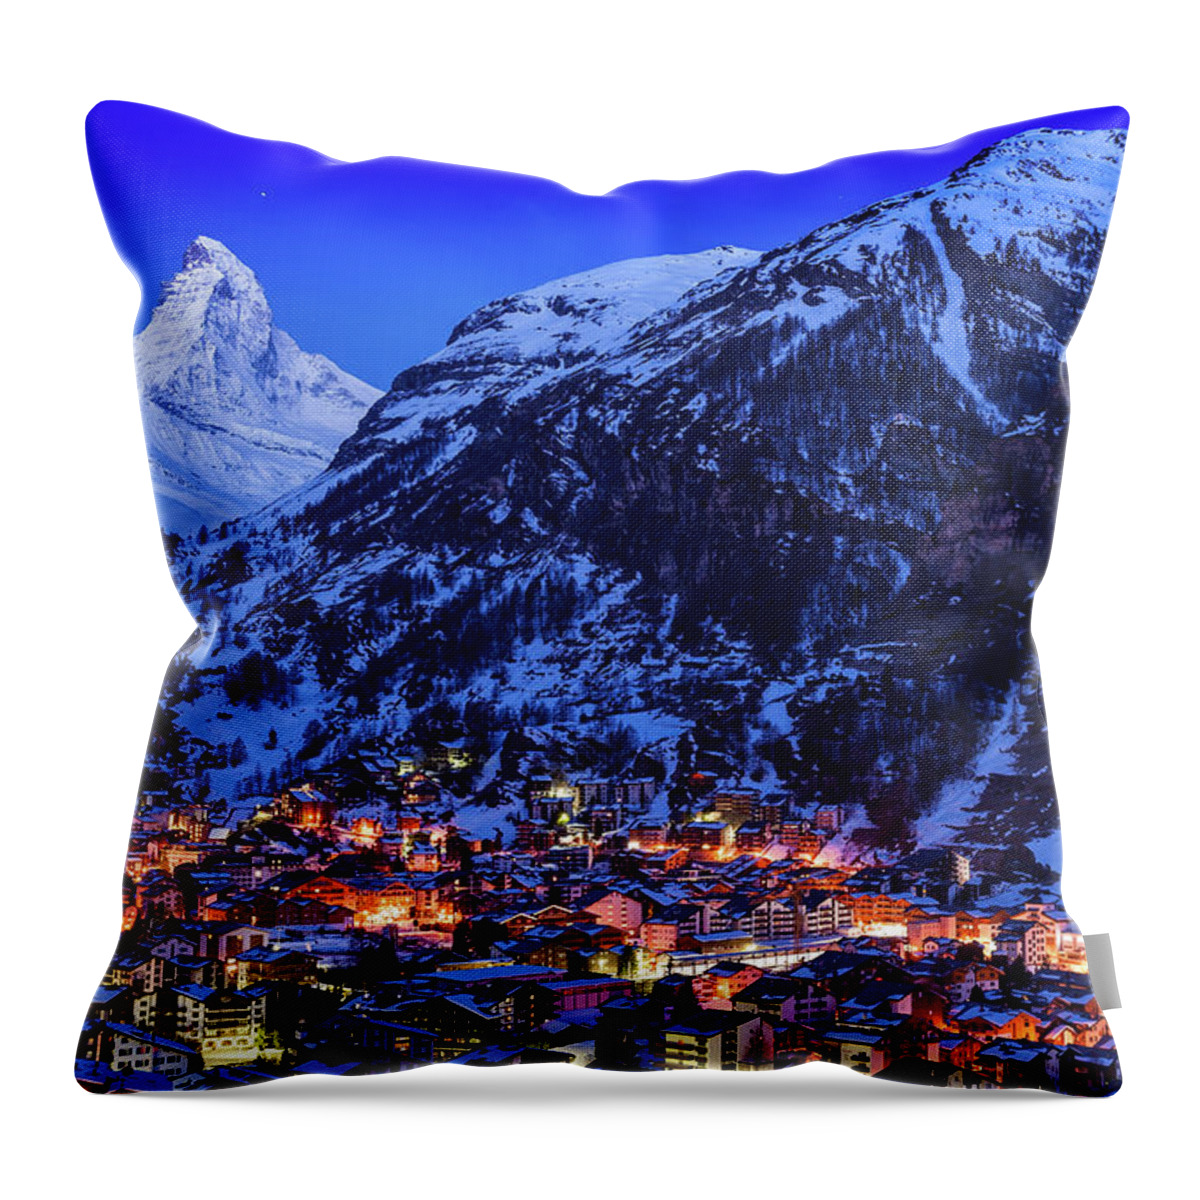 Clear Sky Throw Pillow featuring the photograph Matterhorn At Night by Weerakarn Satitniramai